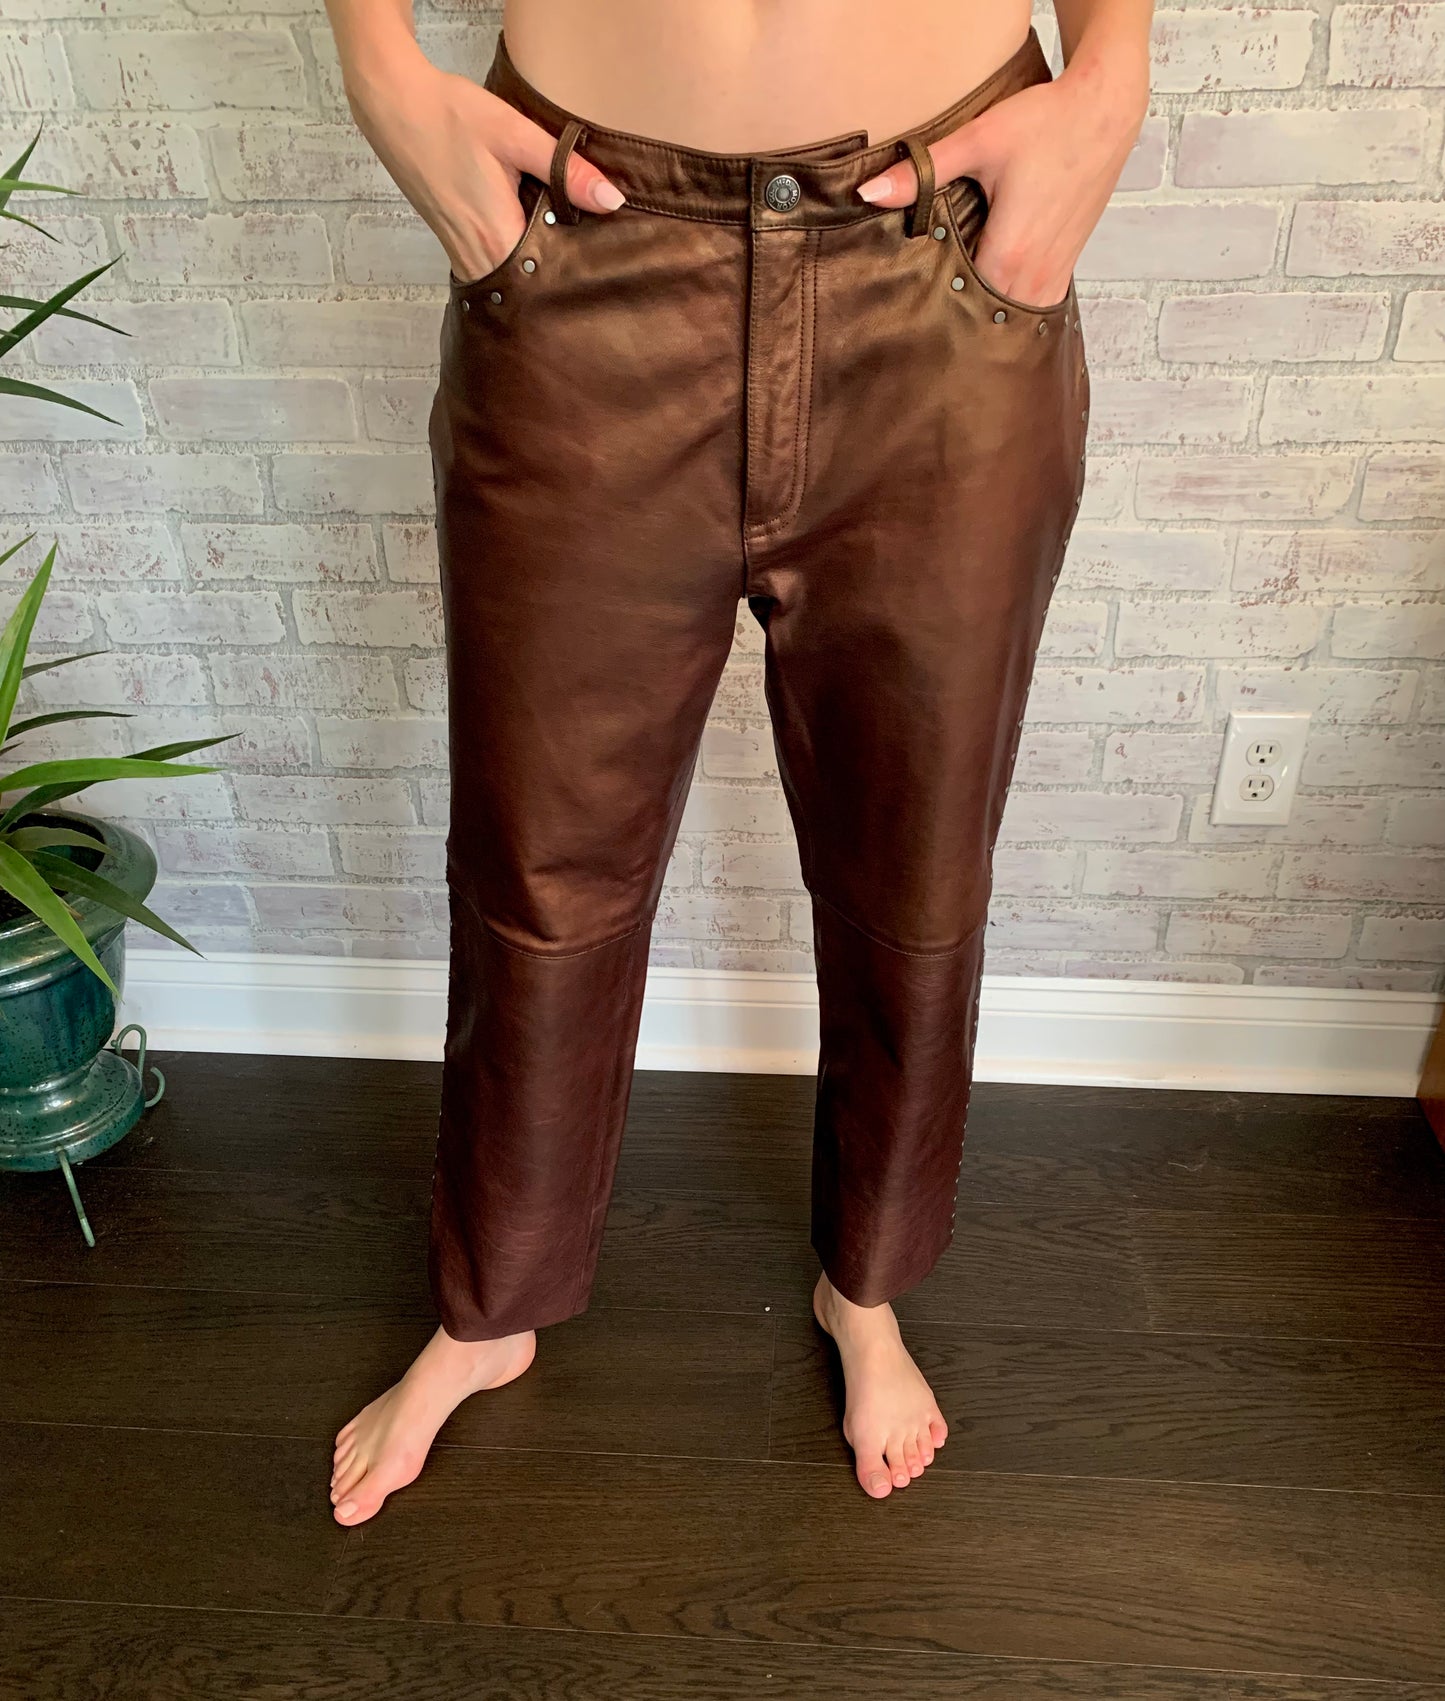 HarleyDavidson Harley Davidson Leather Pants Size: 30, Pants